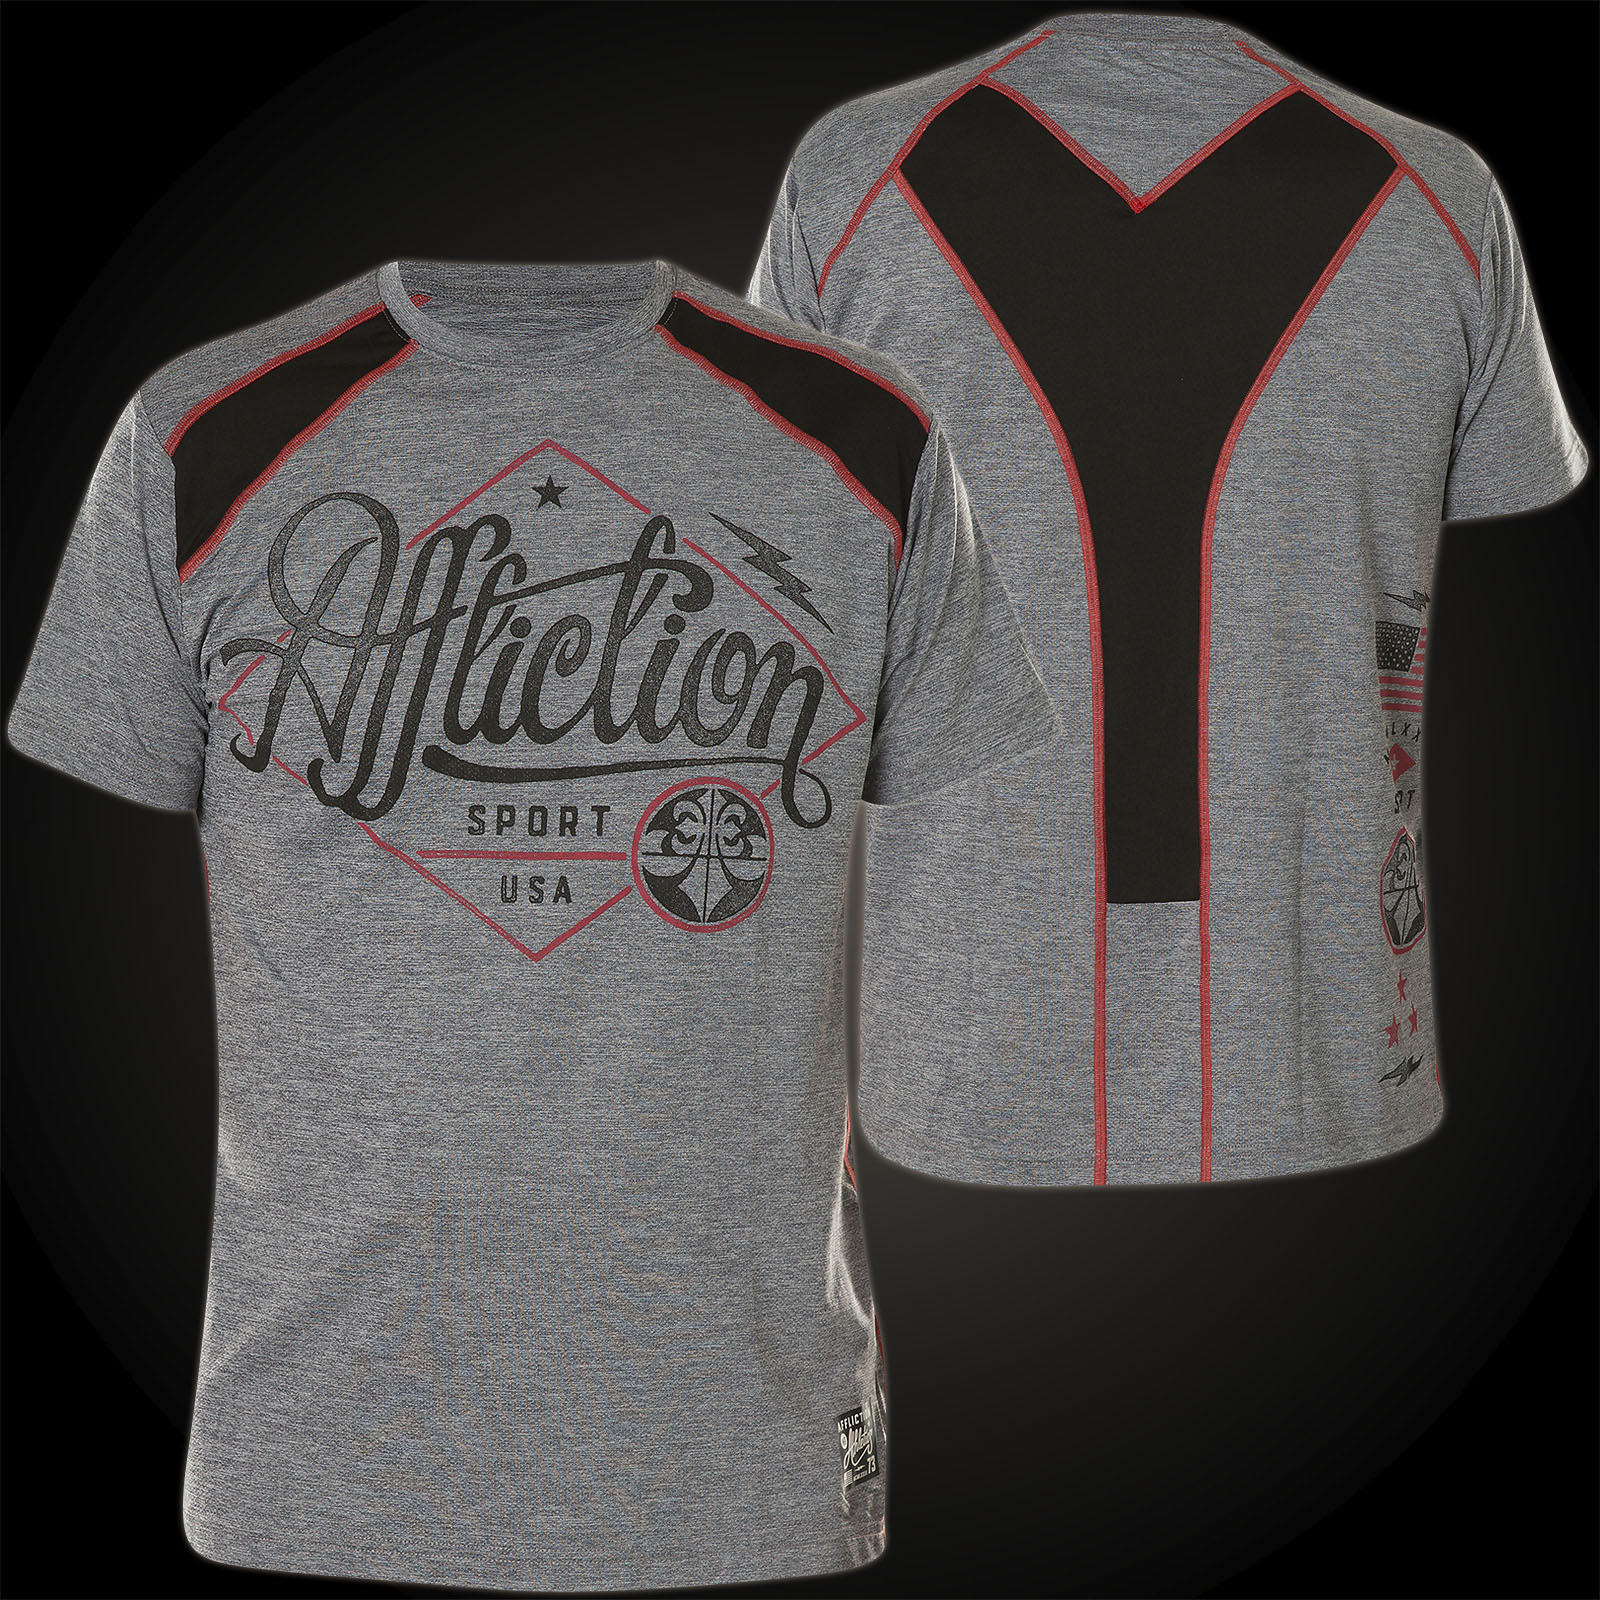 Affliction T-Shirt Sport USA featuring a fleur de lis and lettering